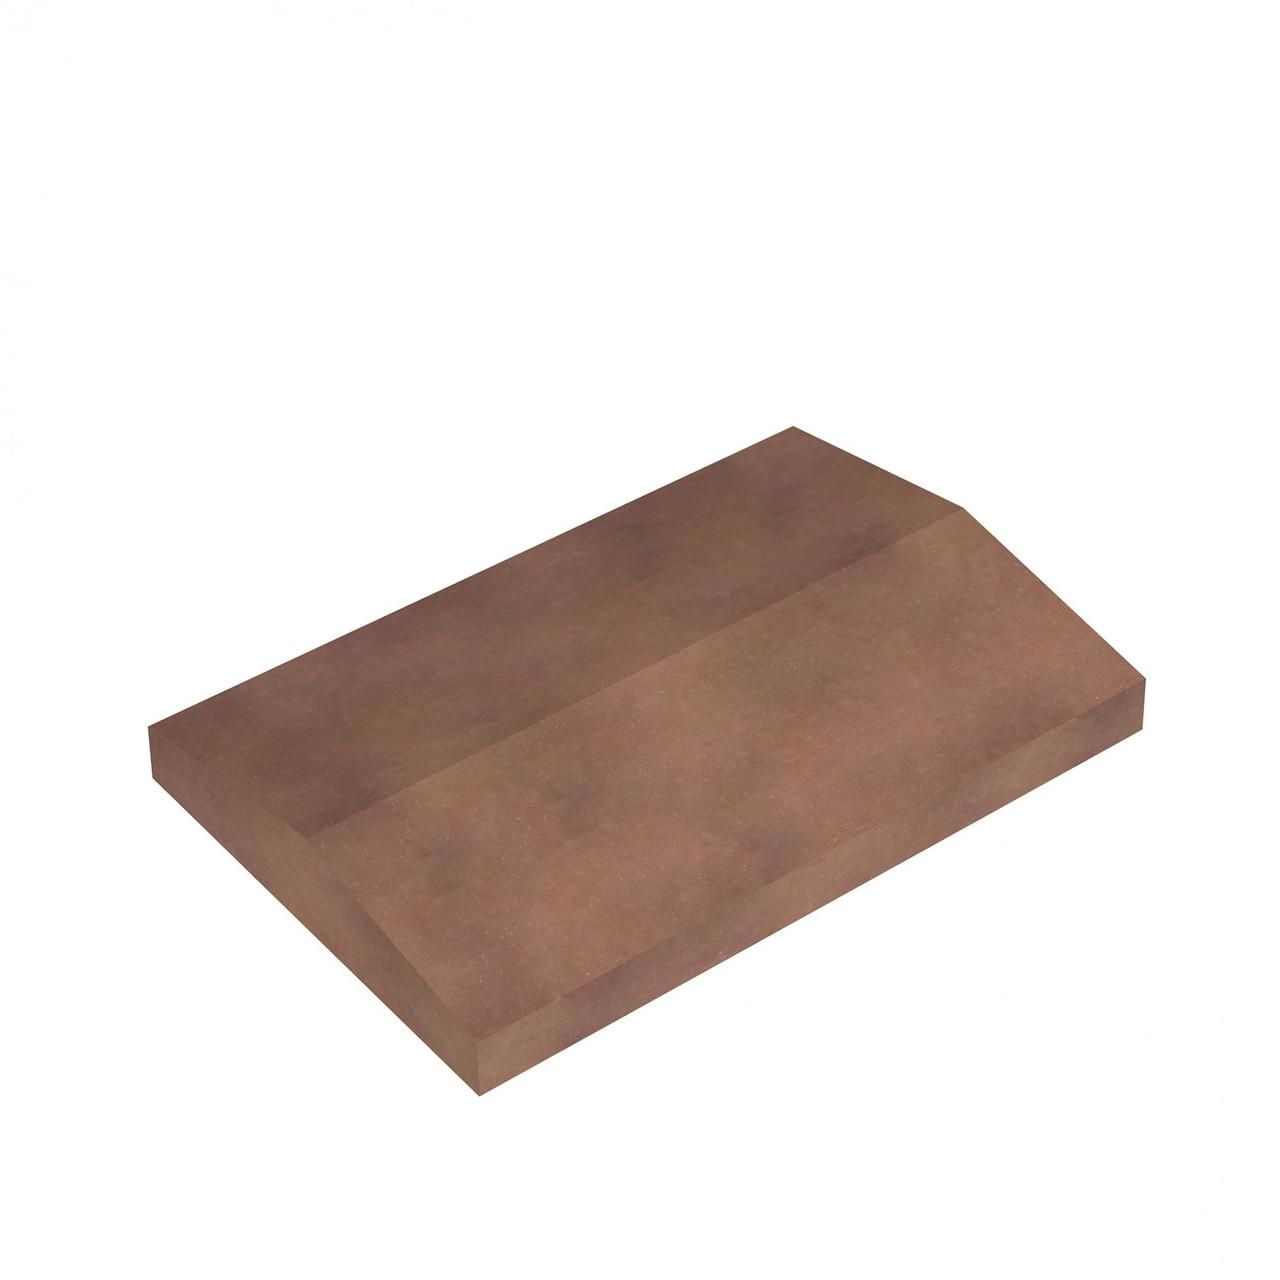 Крышка для пролета бетонная гладкая 390*265 мм (Цвет шоколад)